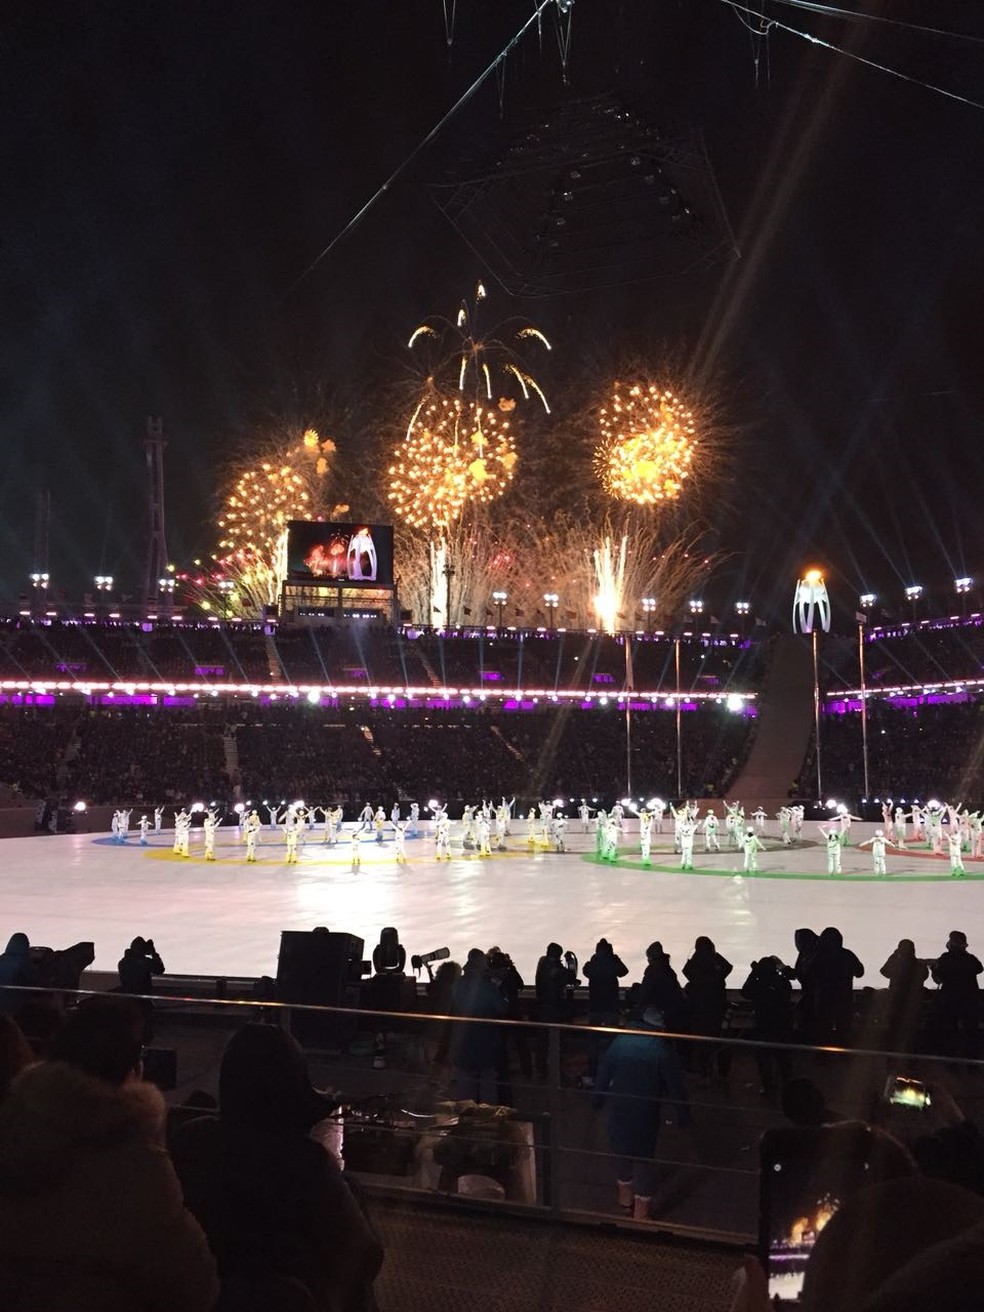 Festa de encerramento dos Jogos Olímpicos de Inverno (Foto: Raphael Andriolo)